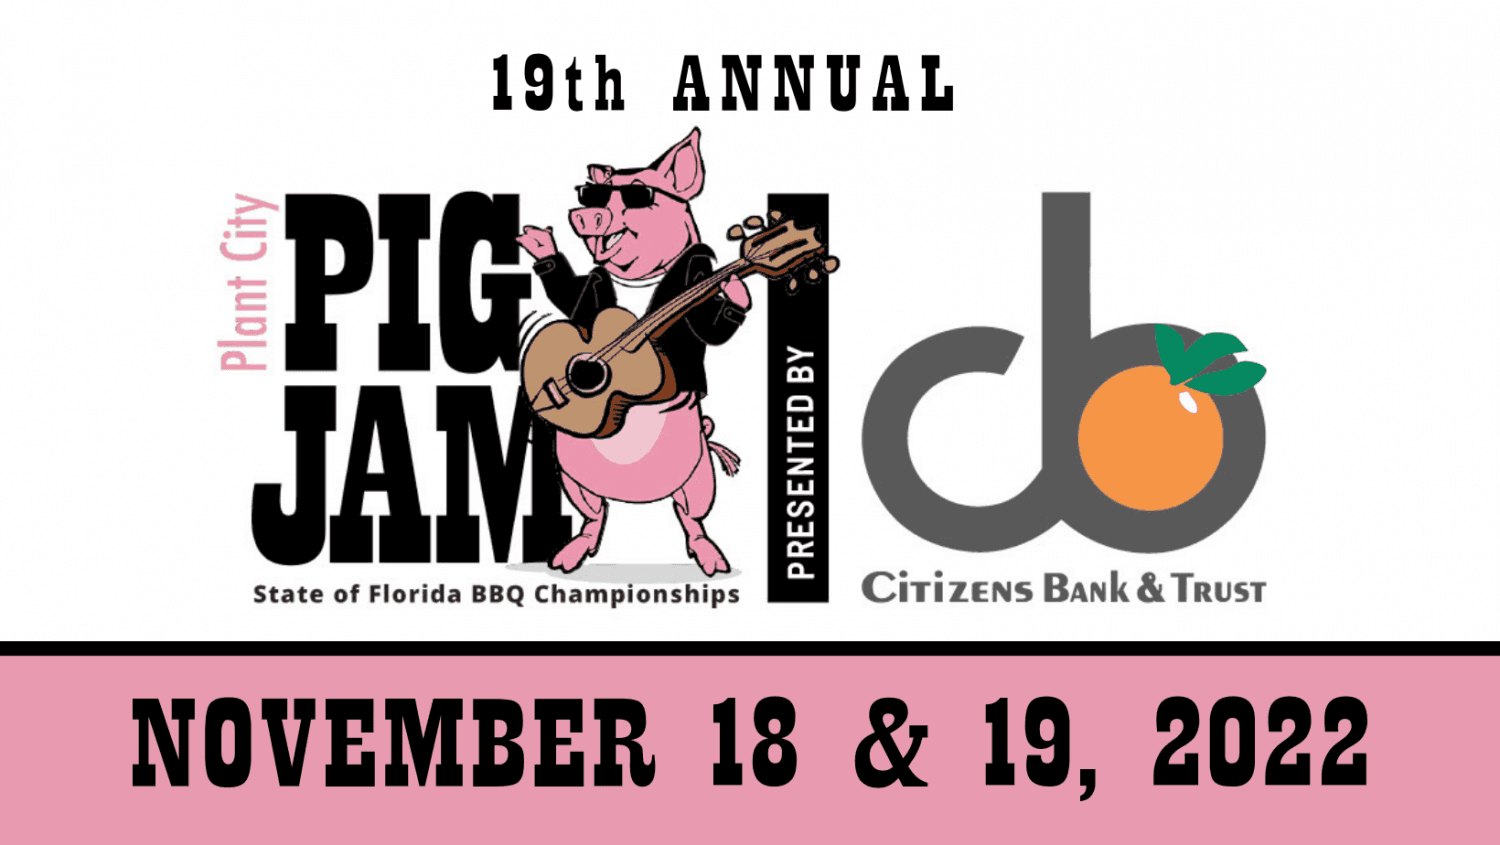 19th Annual Plant City Pig Jam
Fri Nov 18, 5:00 PM - Sat Nov 19, 5:00 PM
in 14 days